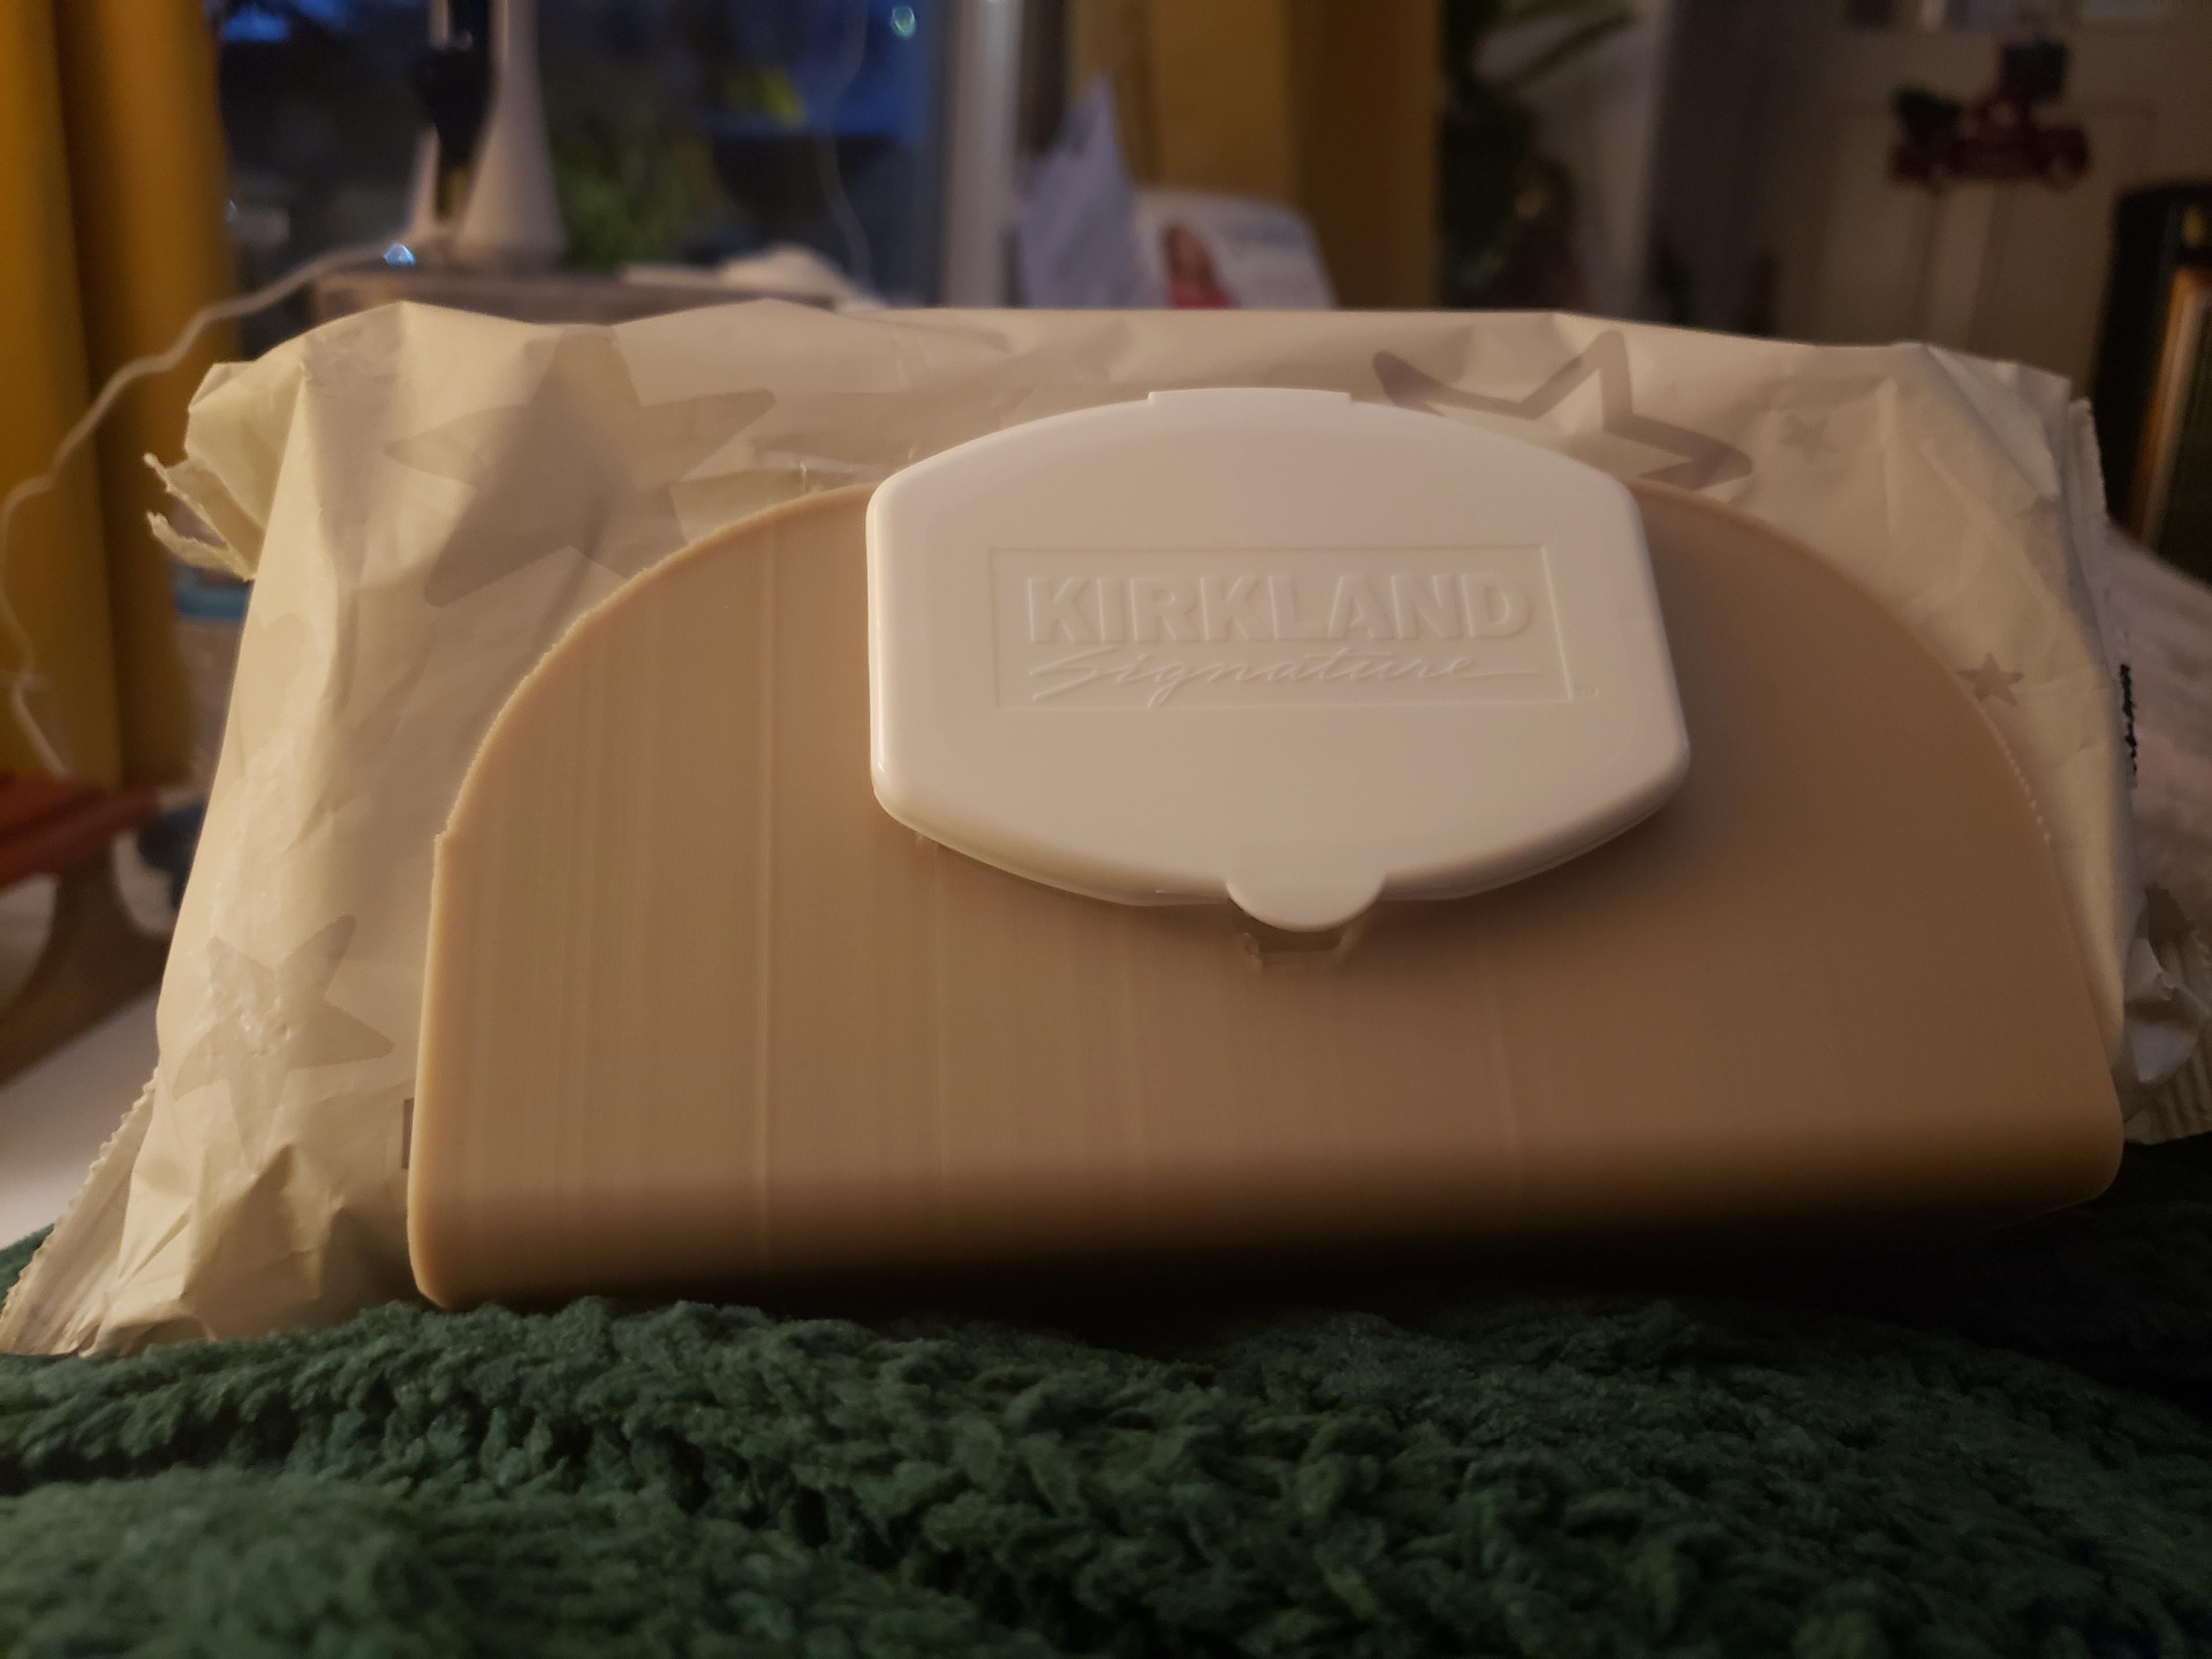 Costco Kirkland Baby Wipes holder 3d model